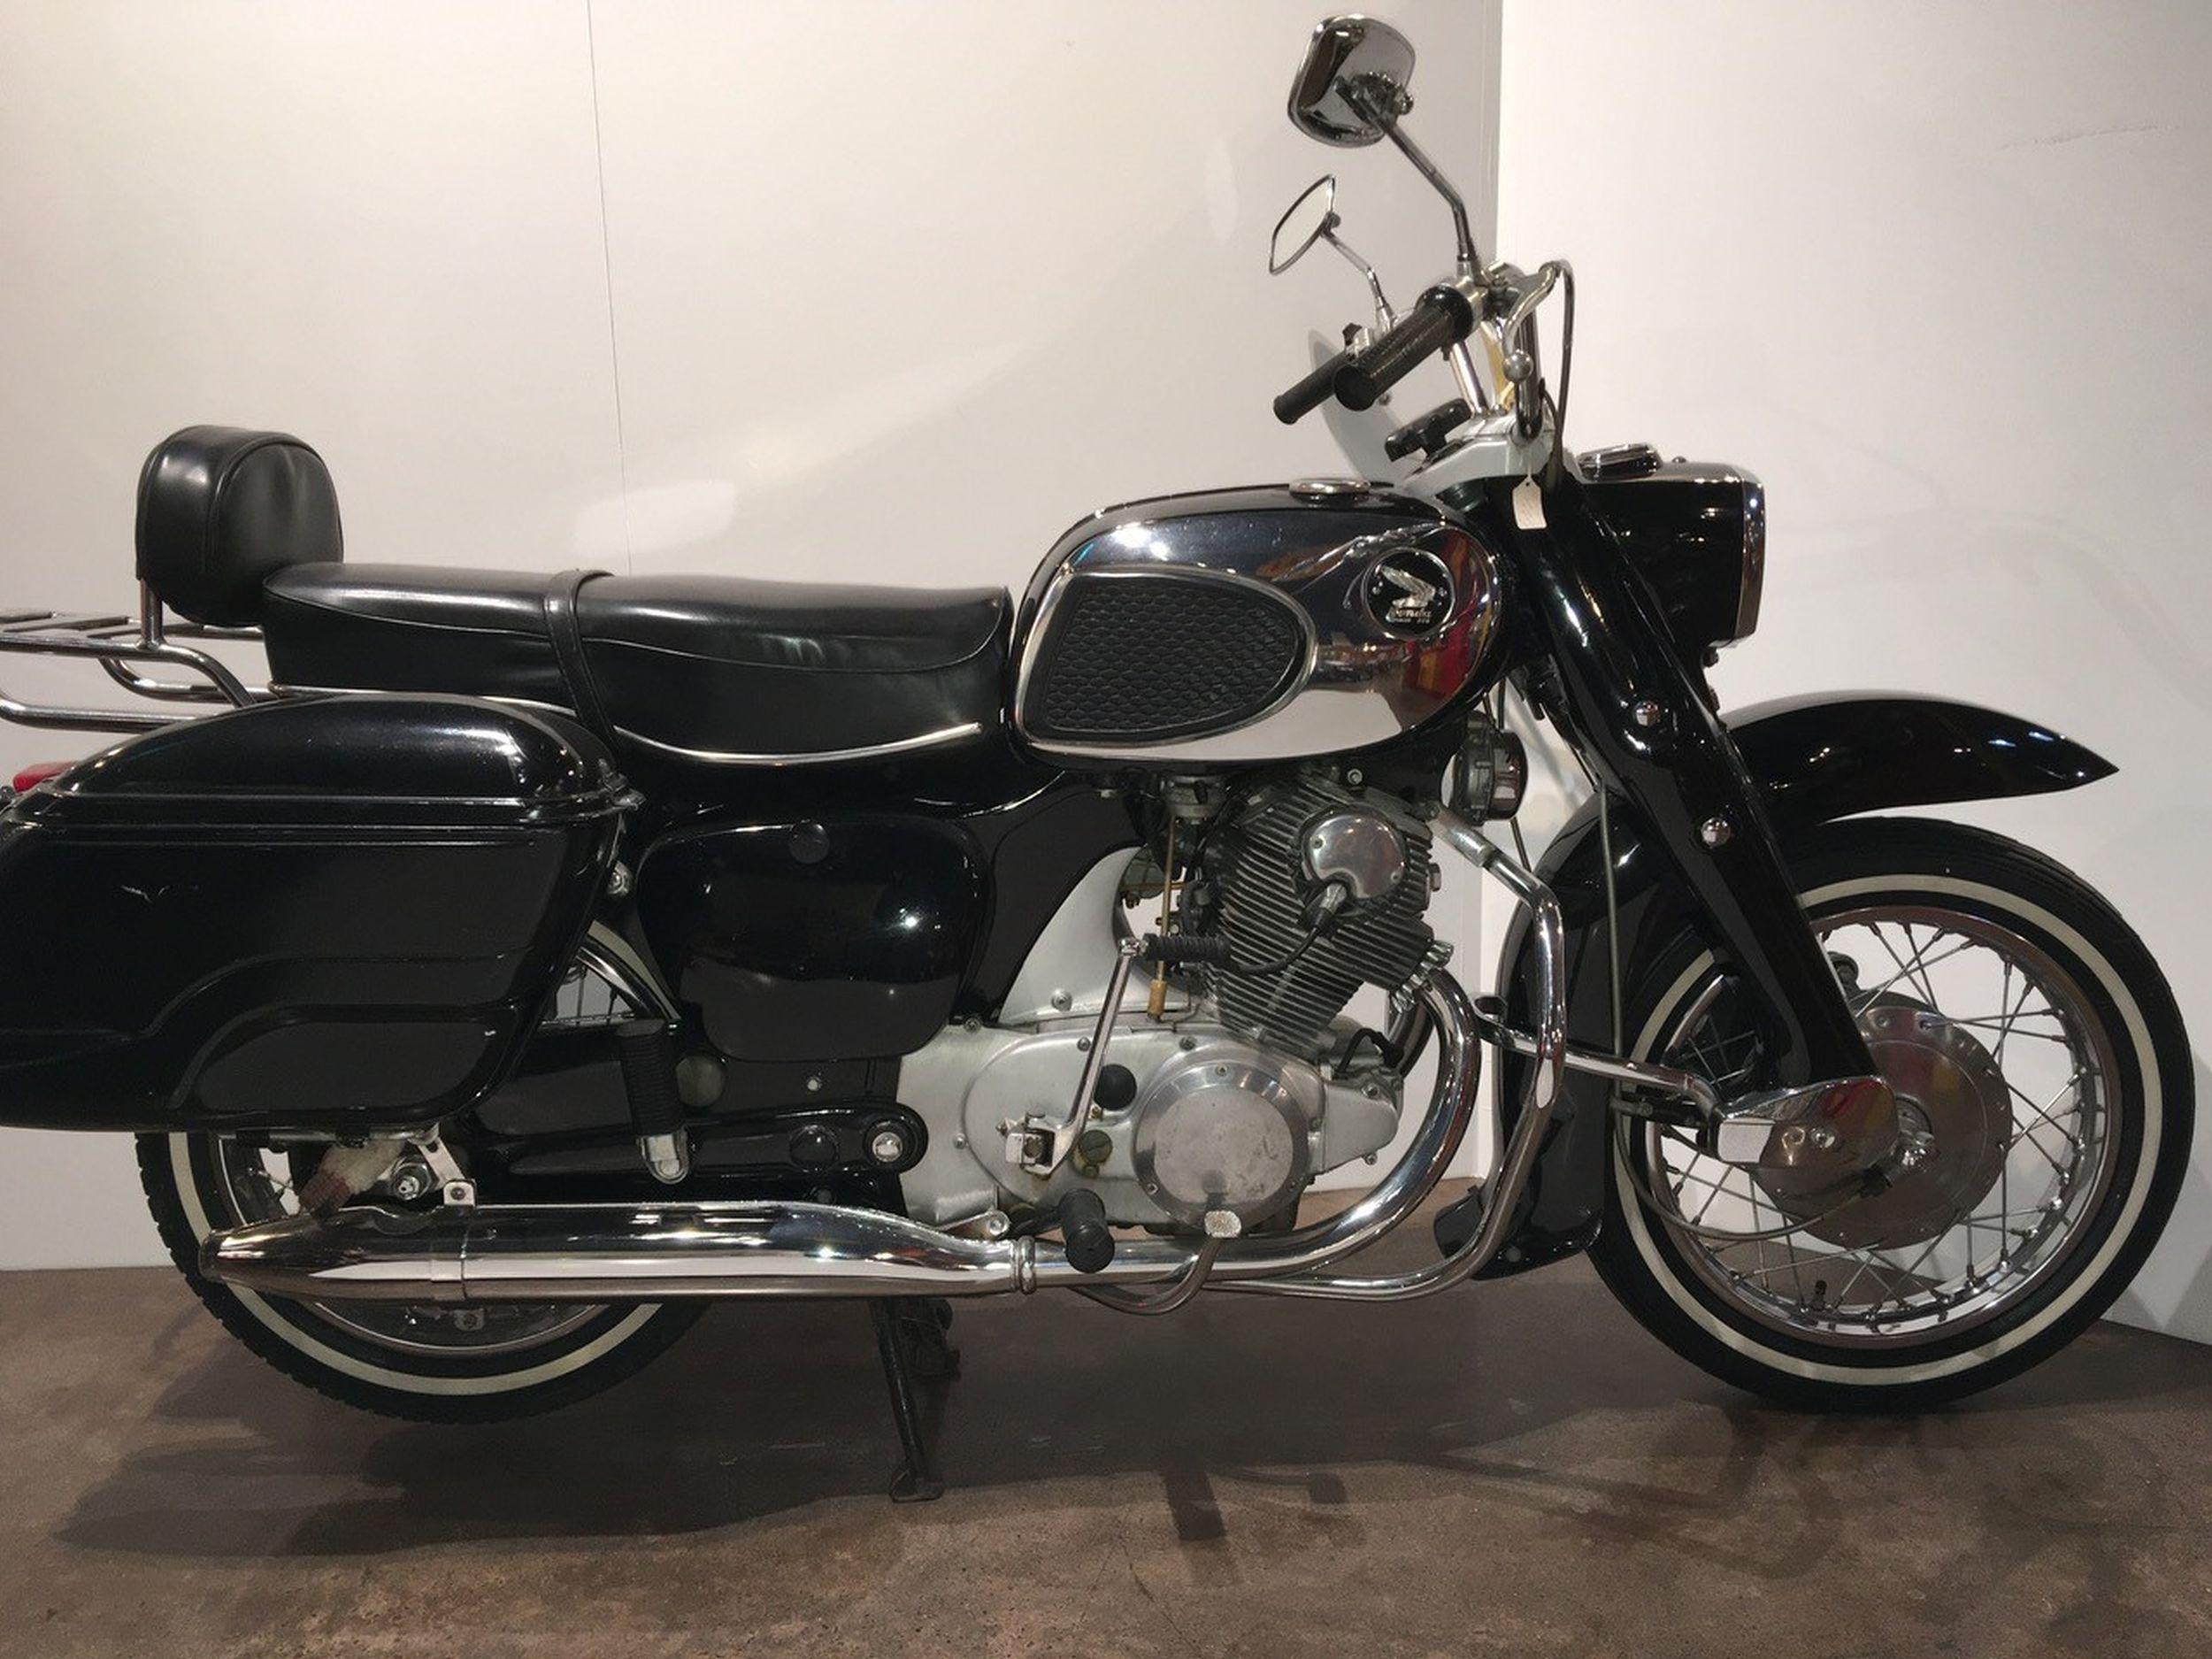 1967 Honda CA77 Dream Motorcycle